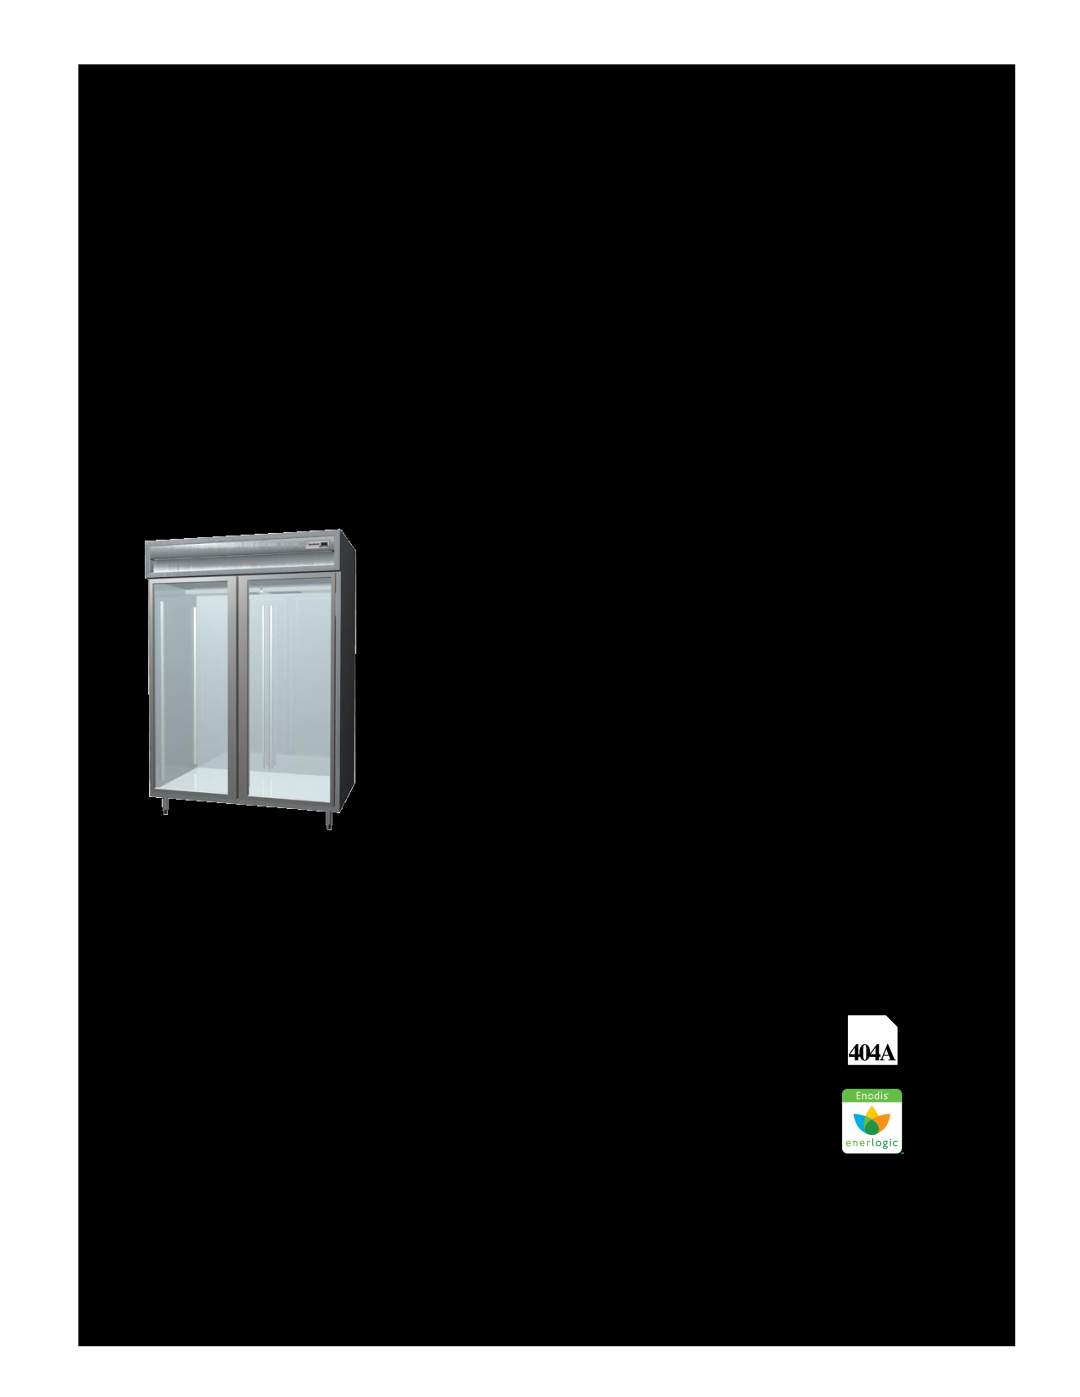 Delfield SMR2-SL specifications Specification Line, Delfield, Self-Contained Sliding Door Reach-In Refrigerator, Models 